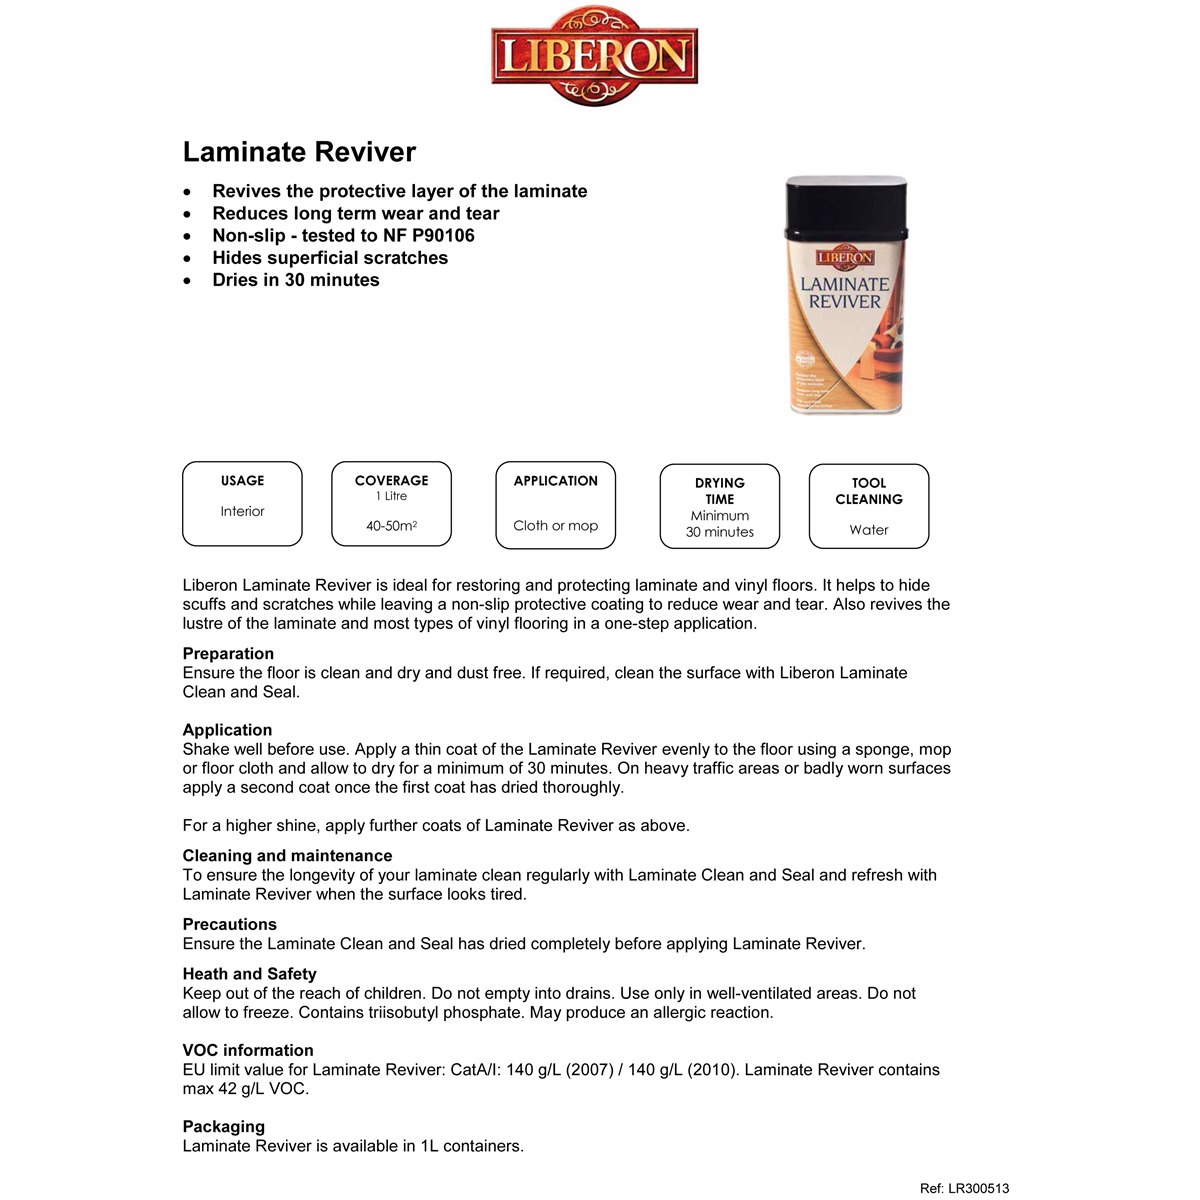 Liberon Laminate Reviver Usage Instructions